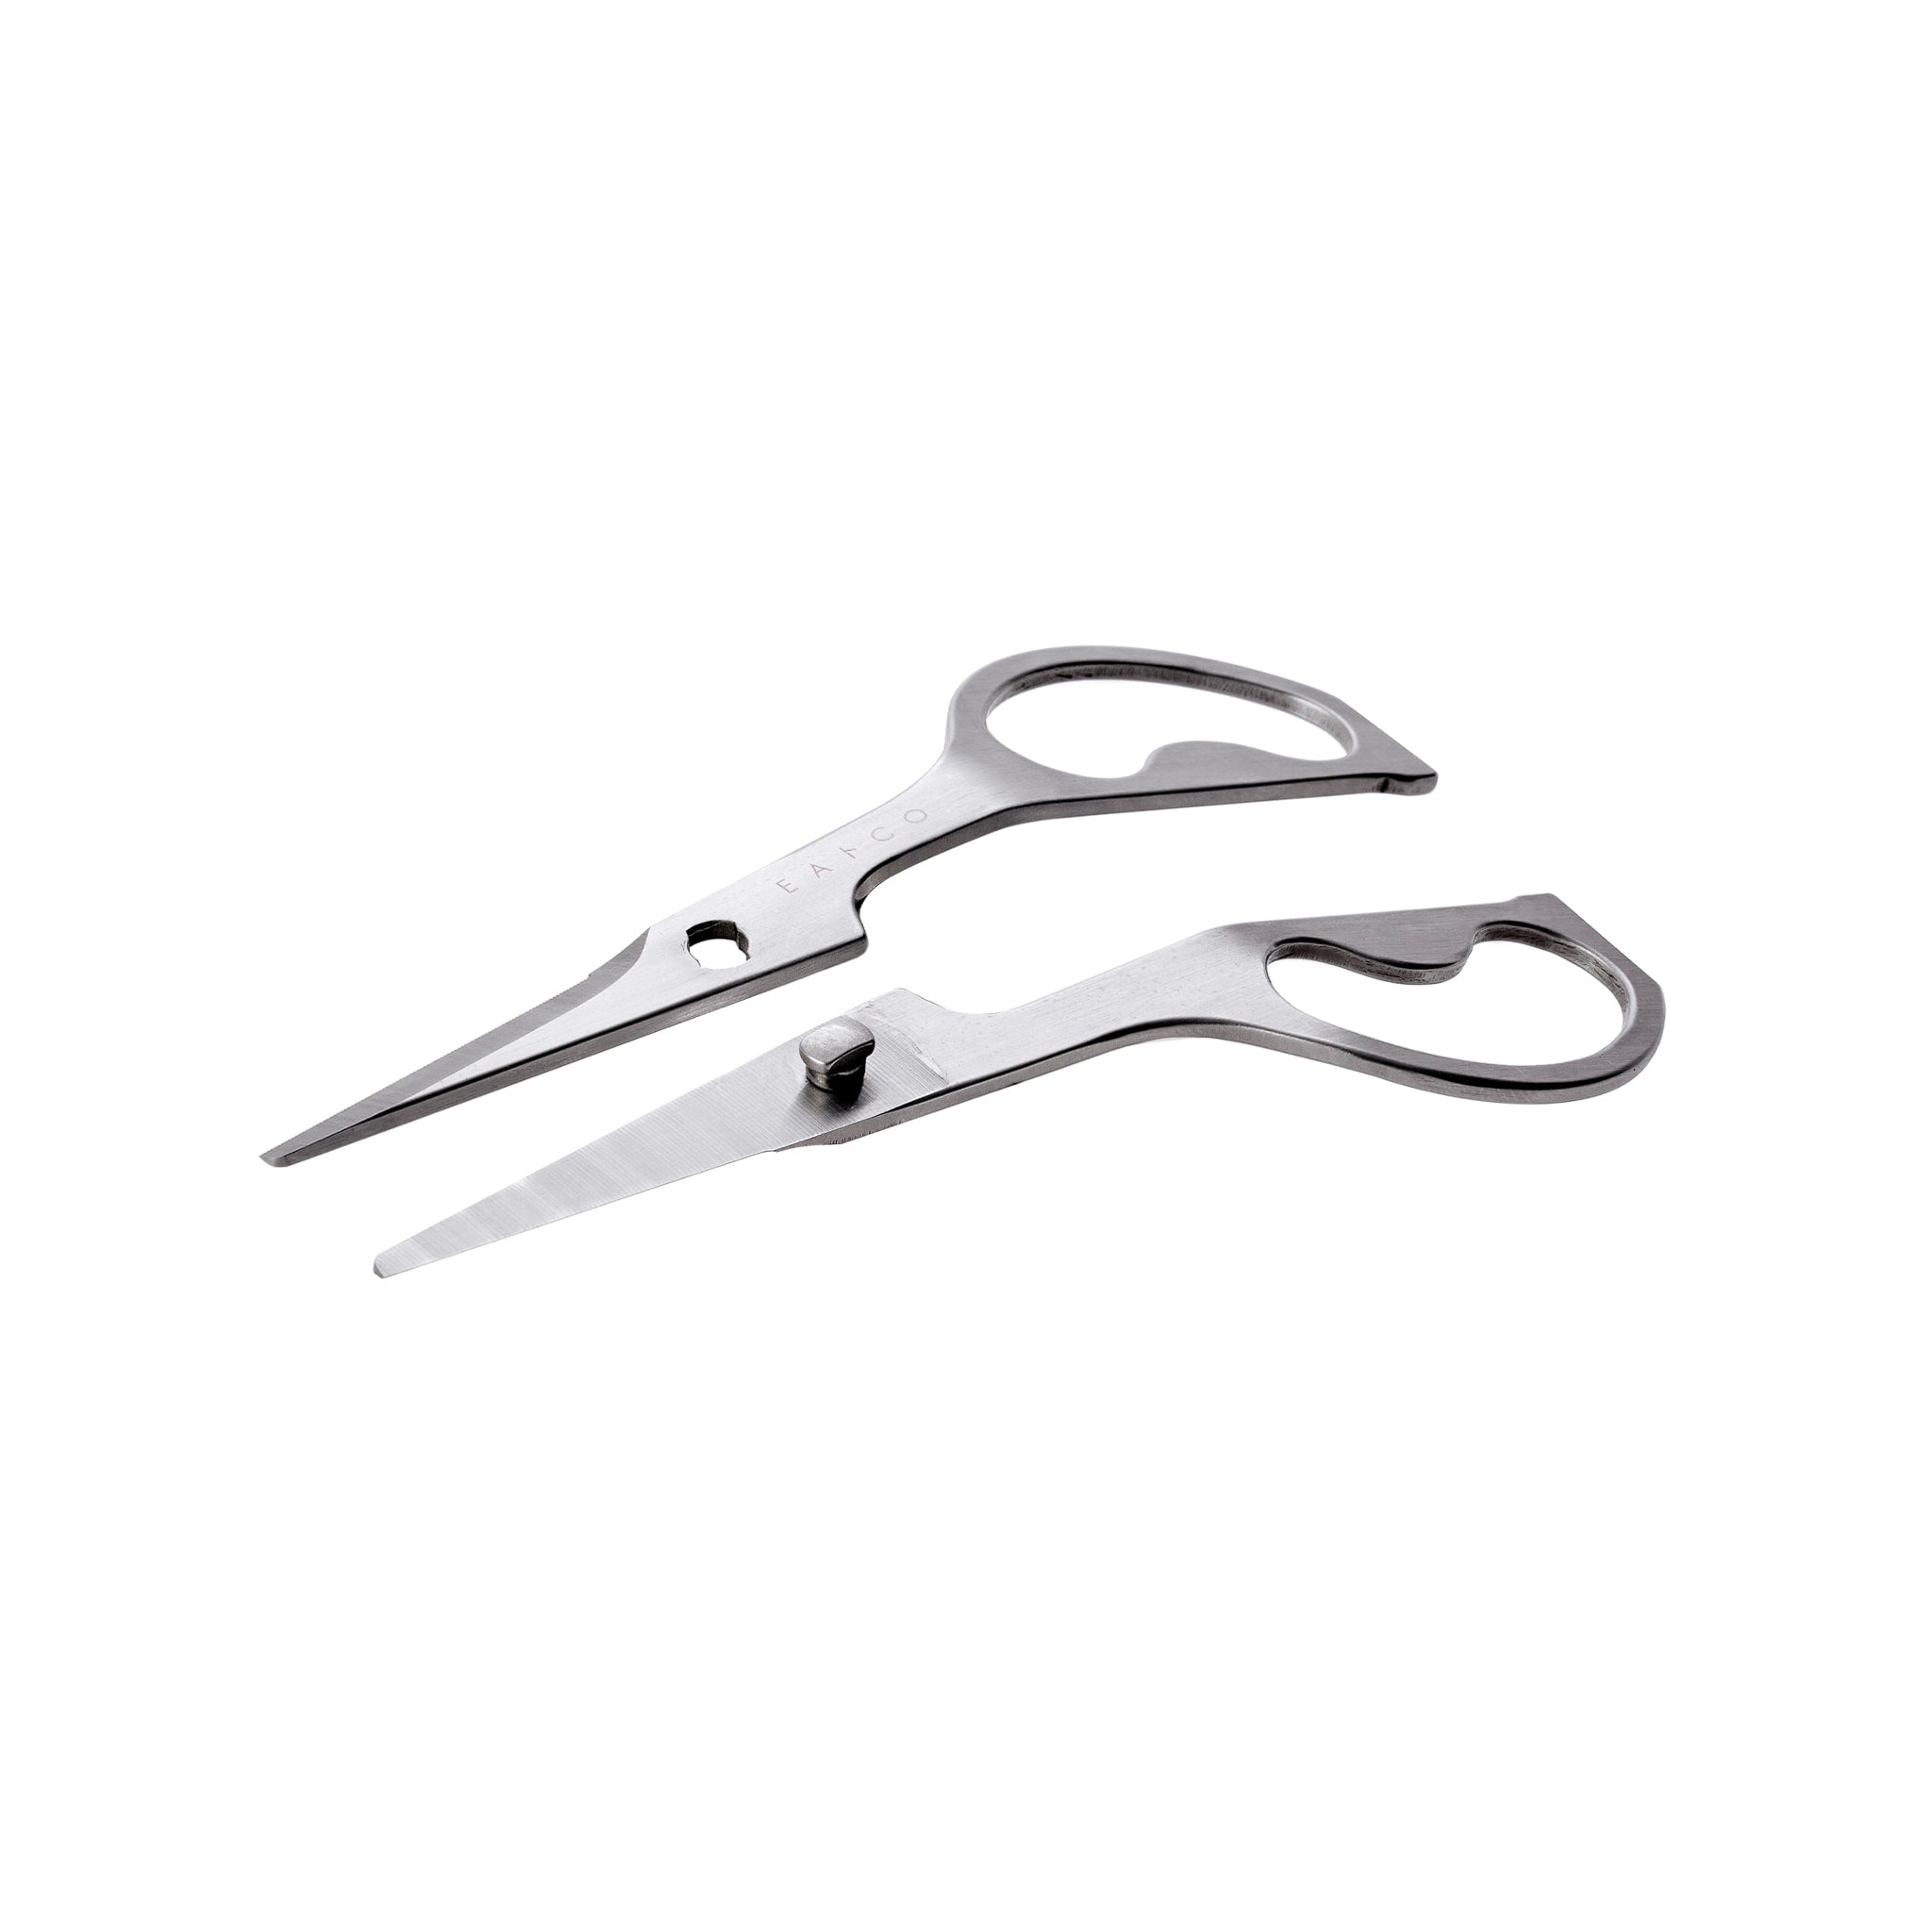 Japanese Stainless Steel Take-Apart Kitchen Scissors